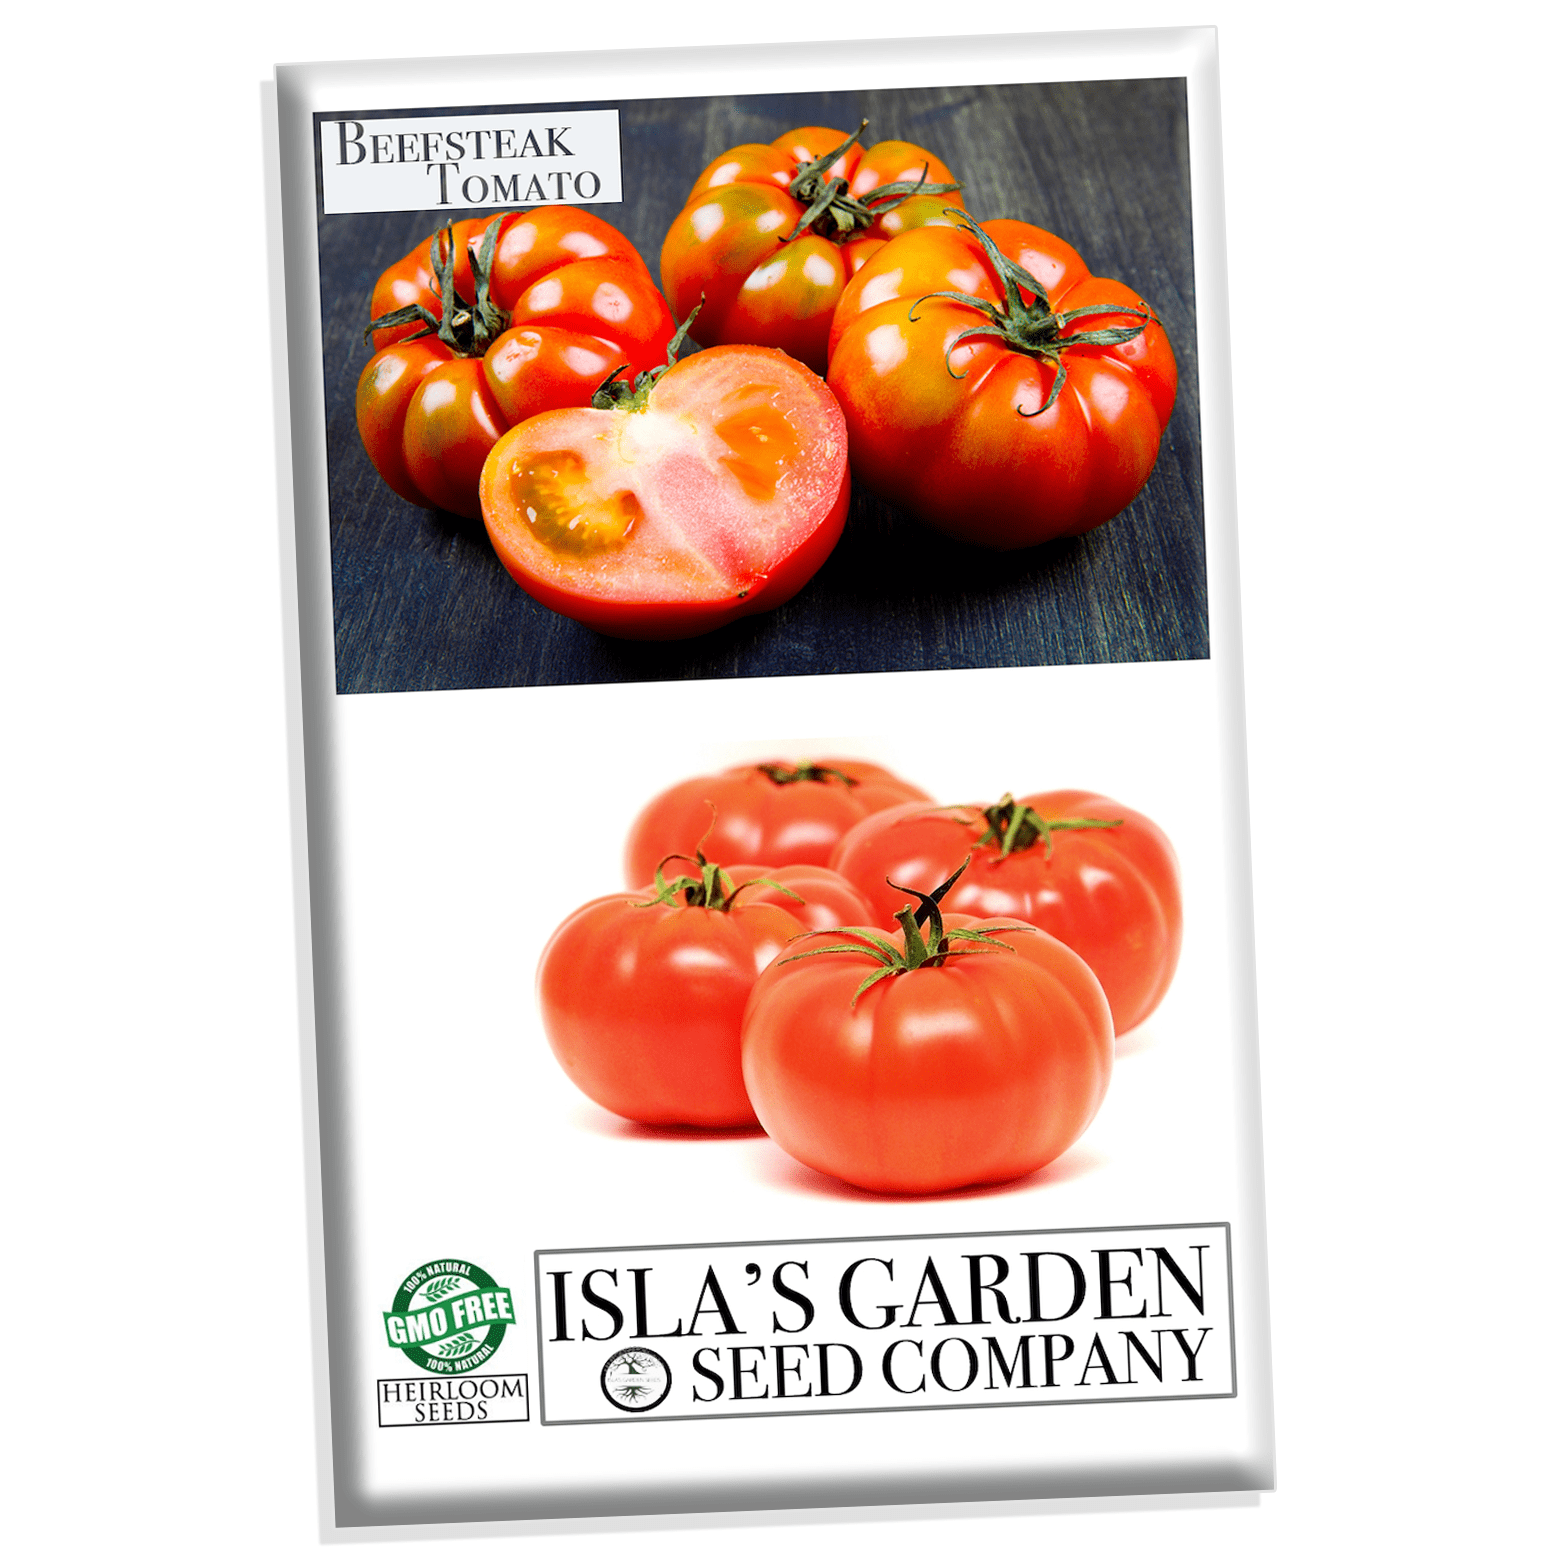 Beefsteak Heirloom Tomato Seeds, 300+ Seeds Per Packet, Non GMO Seeds, Botanical Name: Solanum lycopersicum